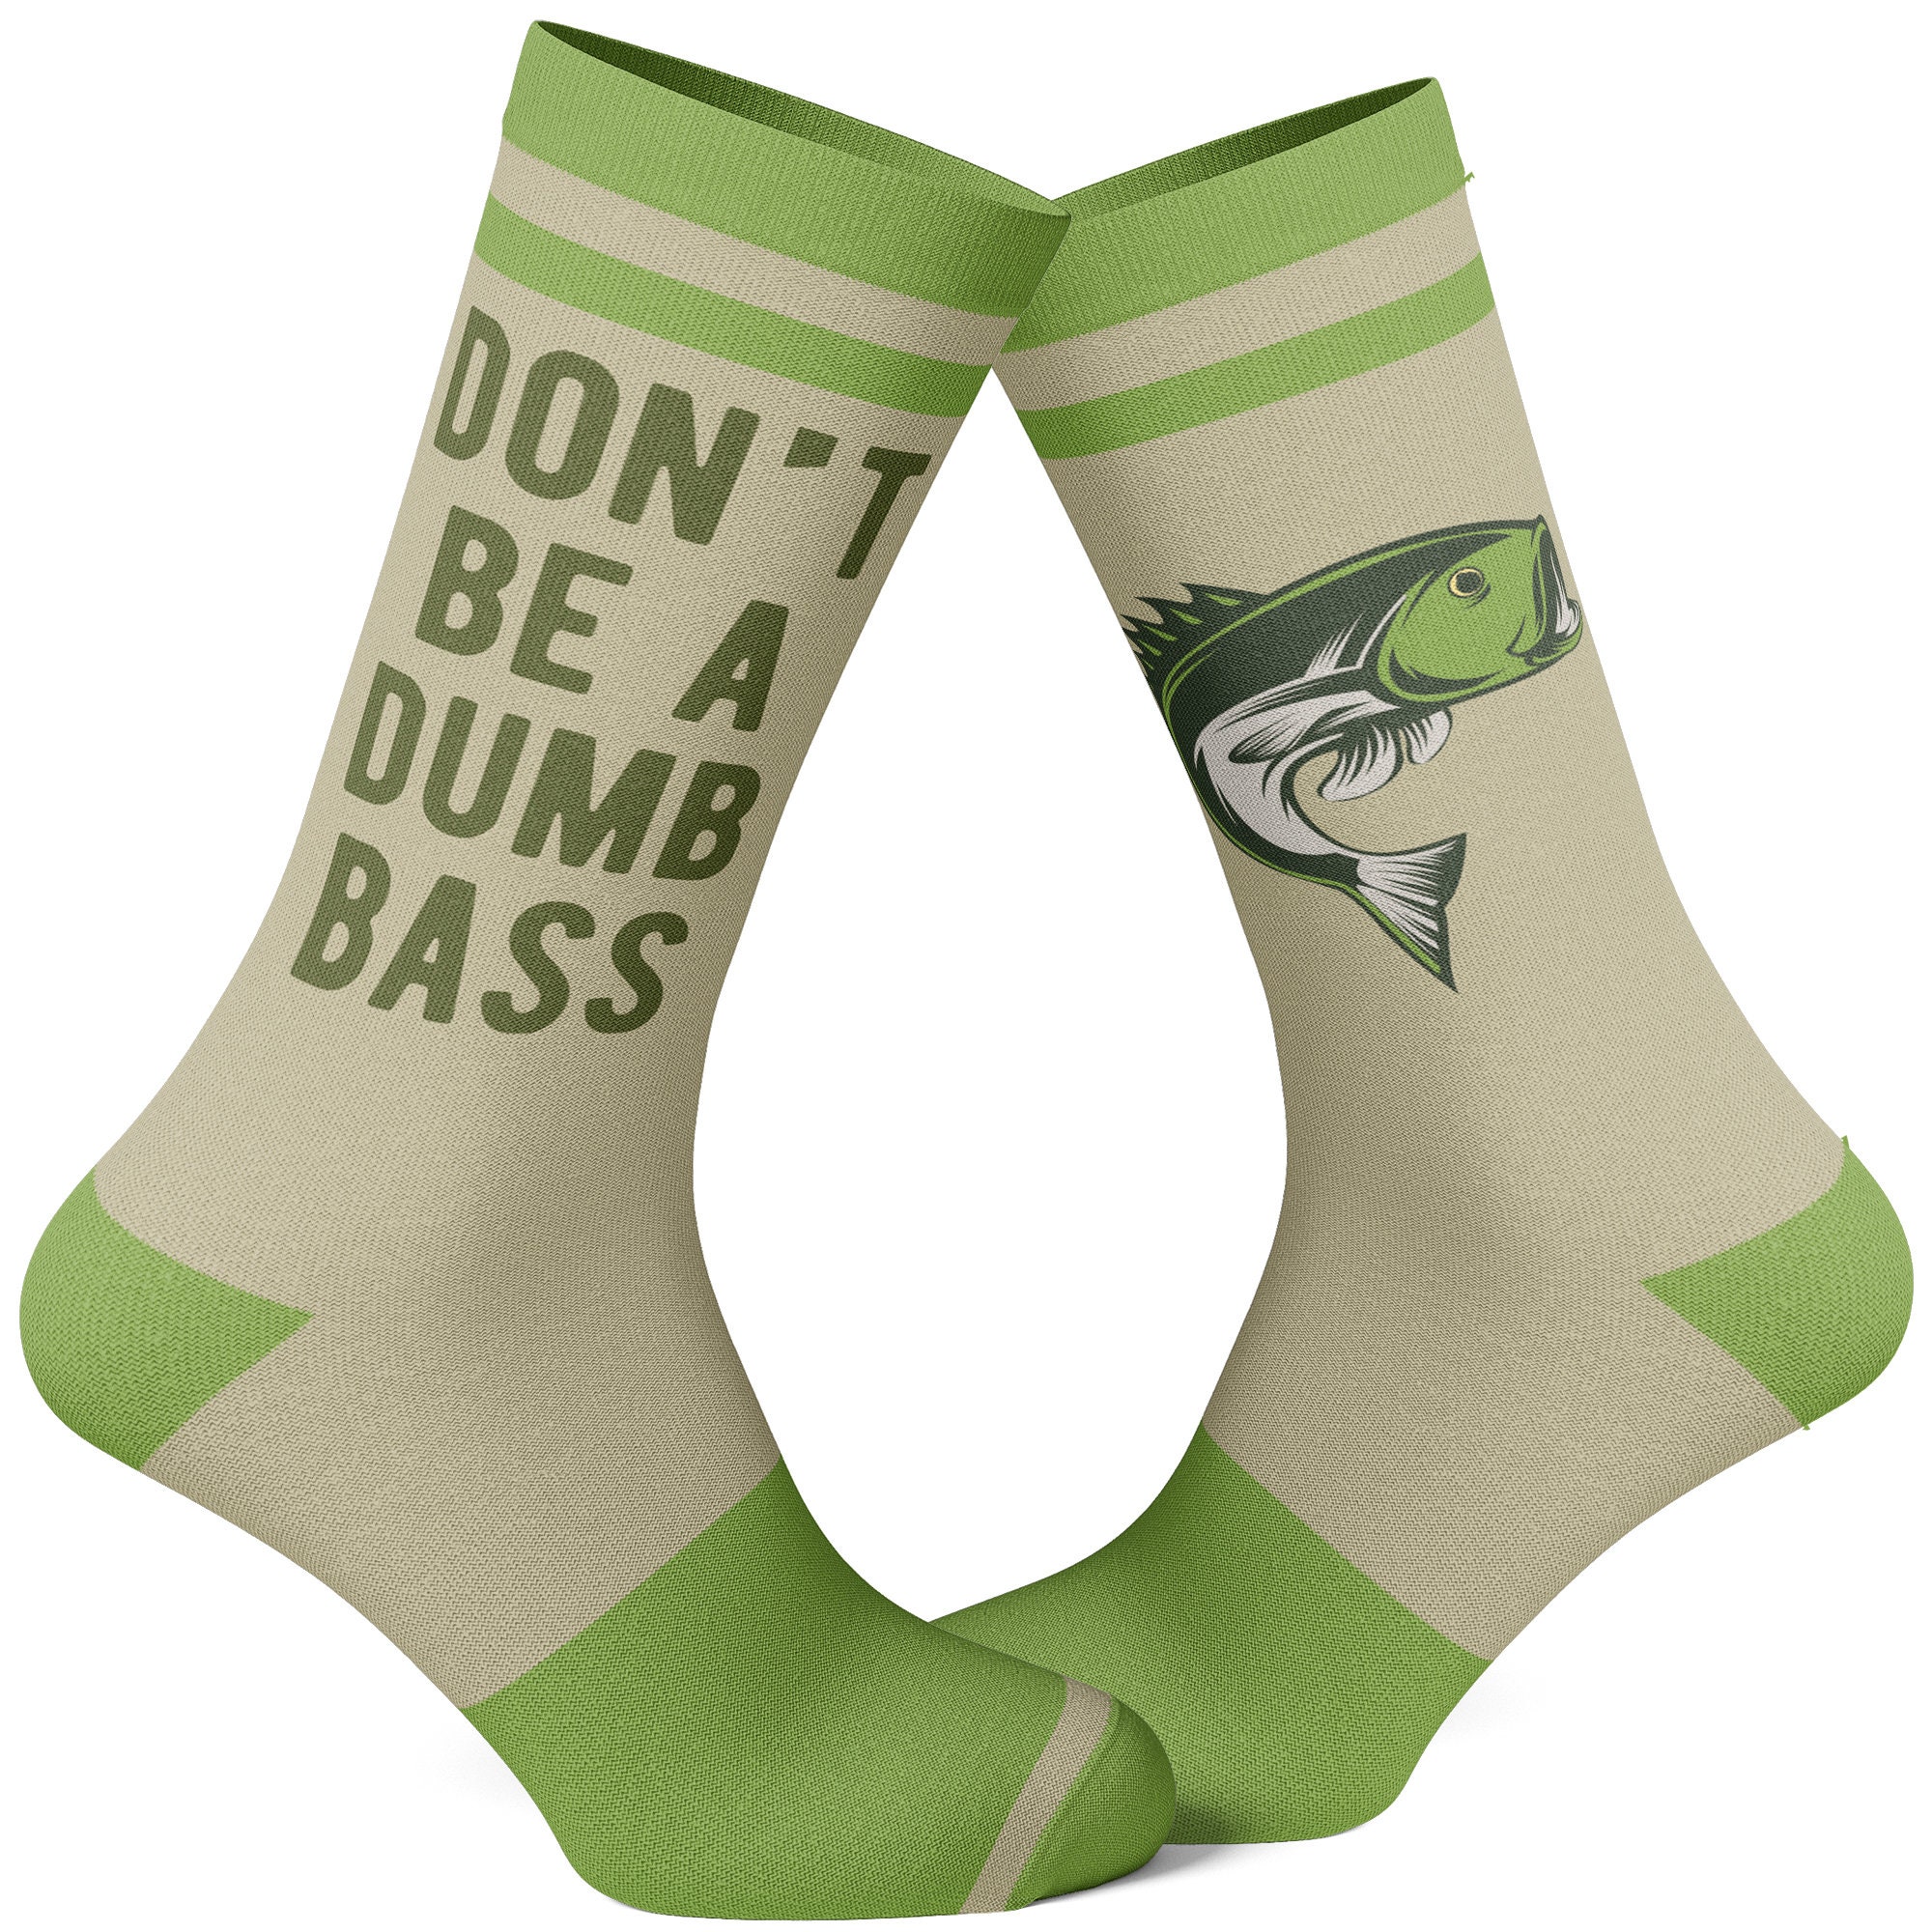 Funny Dad Socks, Don't Be A Dumb Bass Socks, Funky Fishing Socks